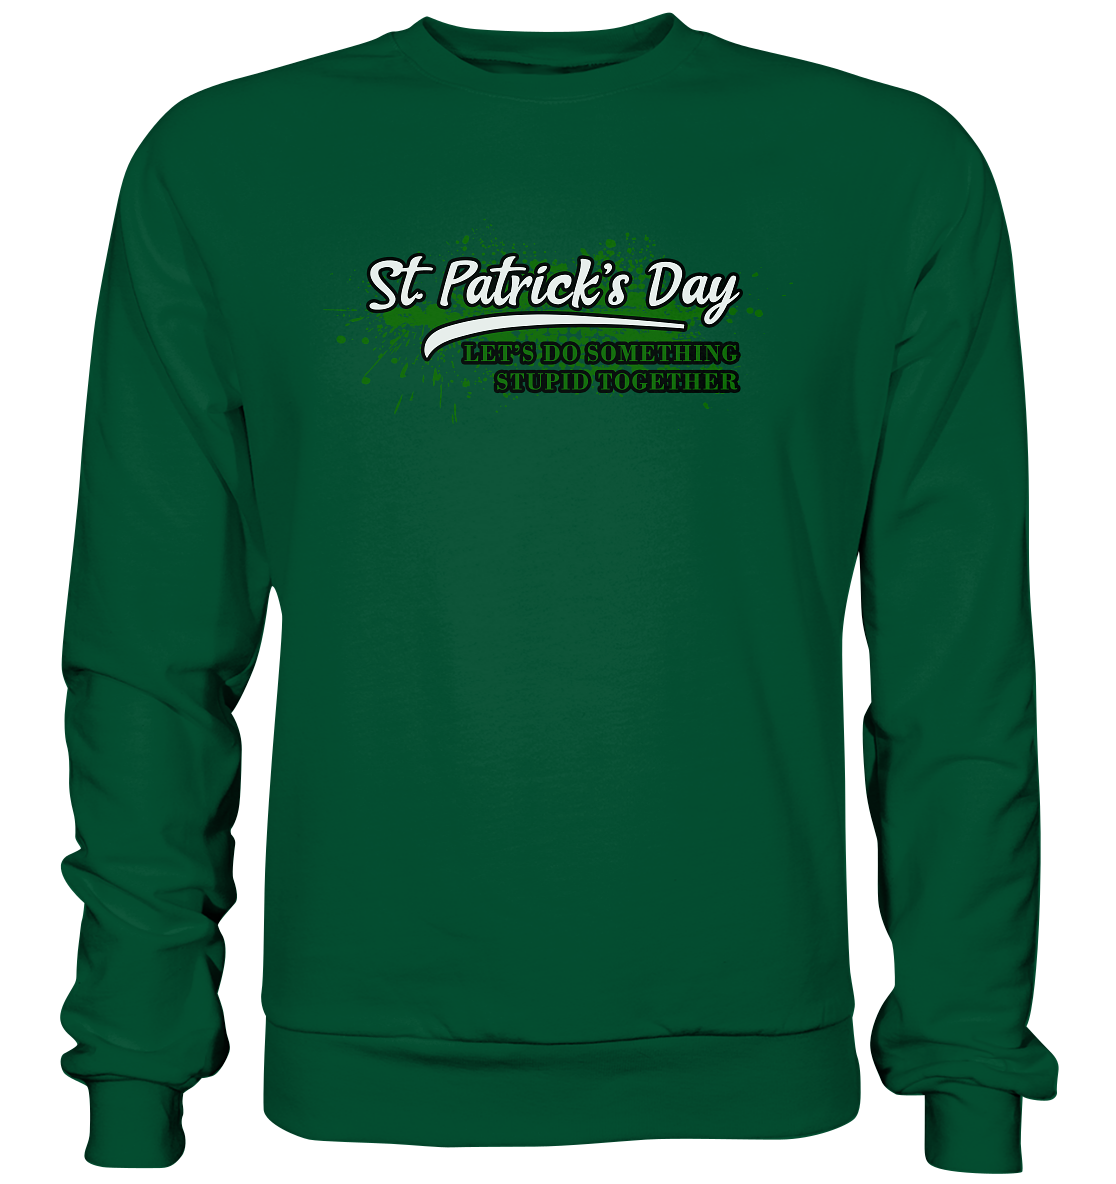 St. Patrick's Day "Let's Do Something Stupid Together" - Basic Sweatshirt